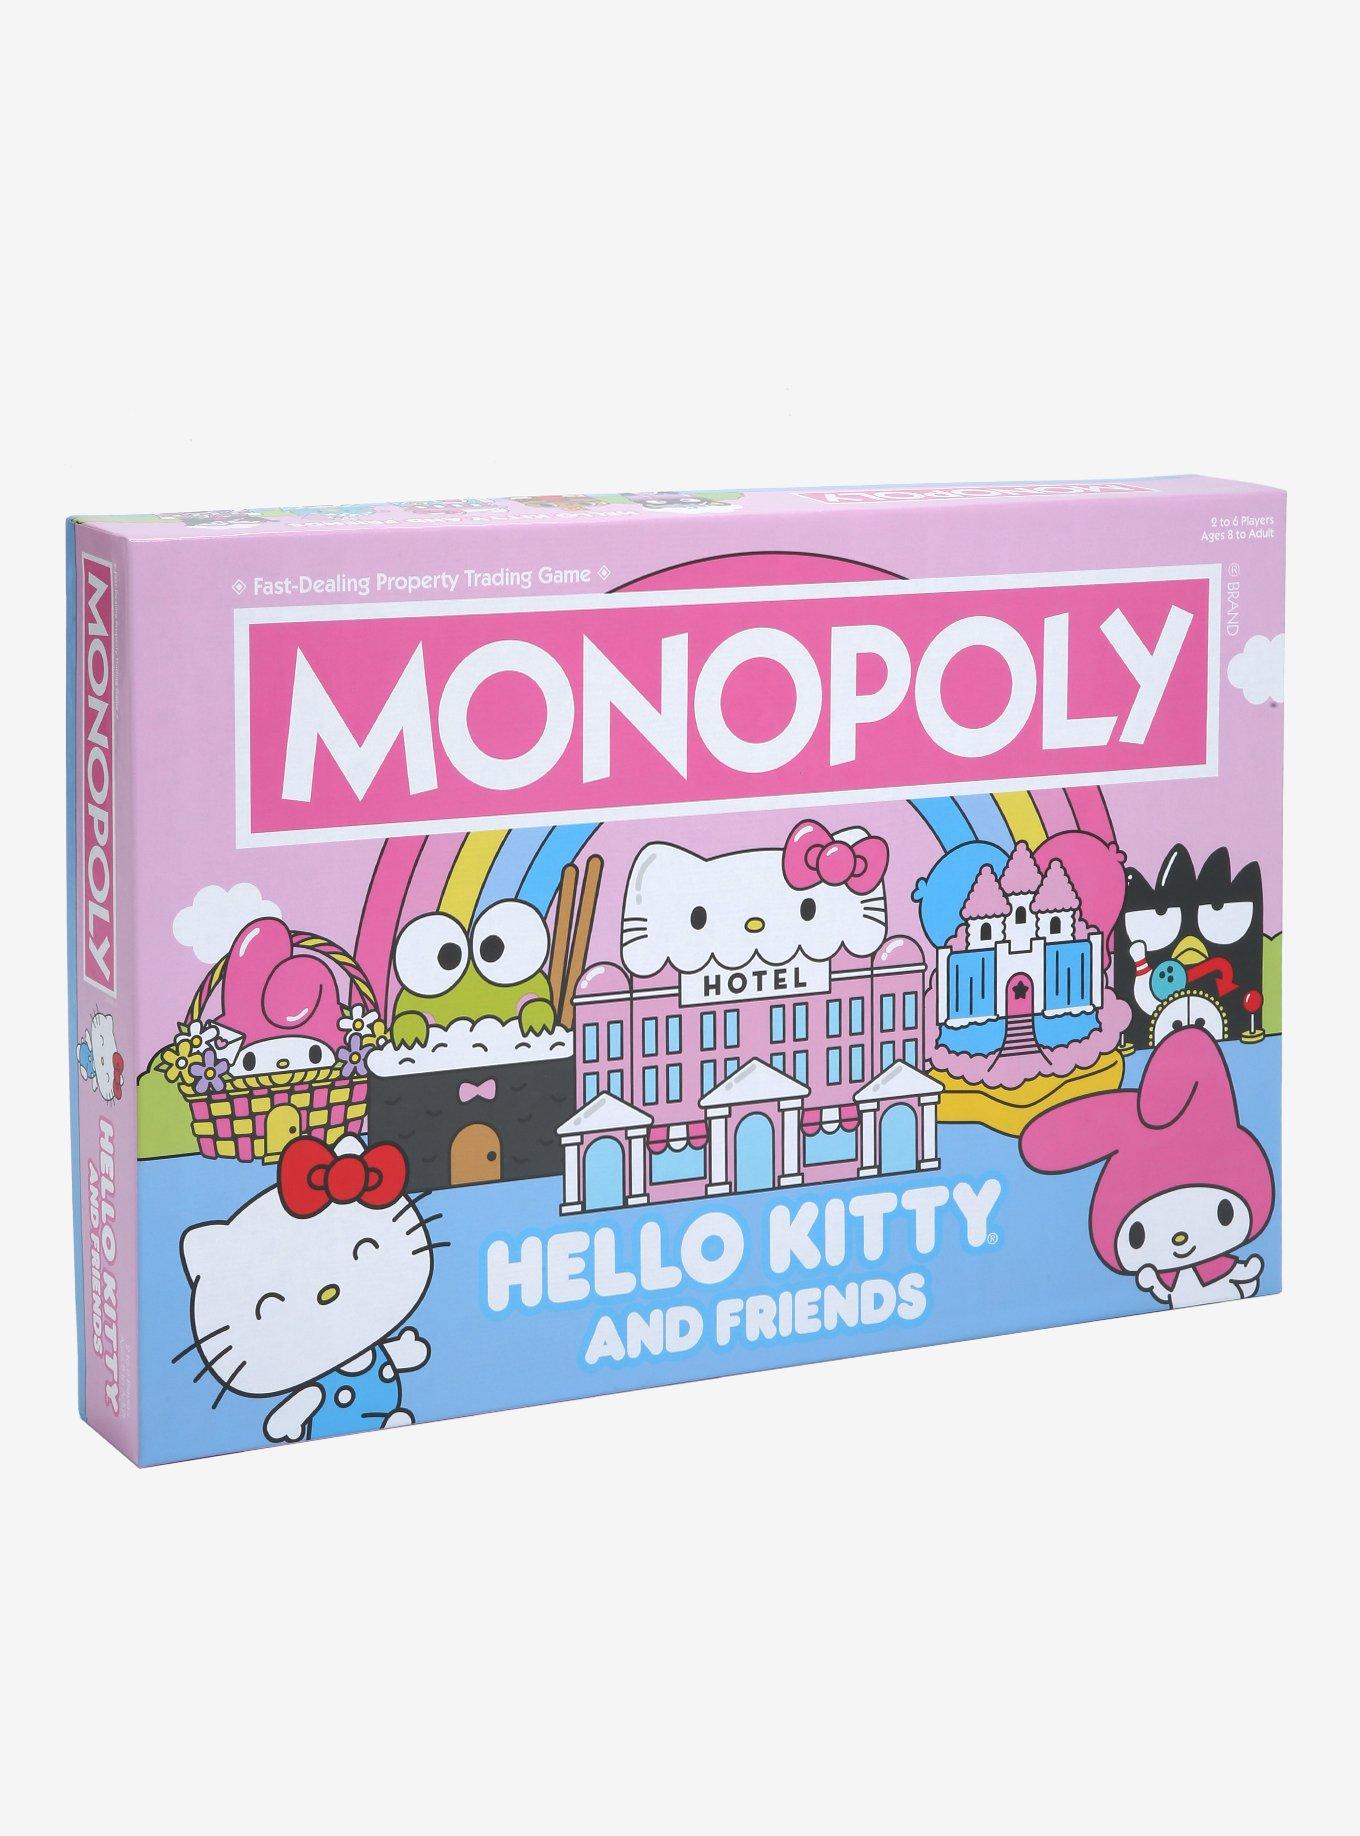 Hello Kitty Bizarre Products